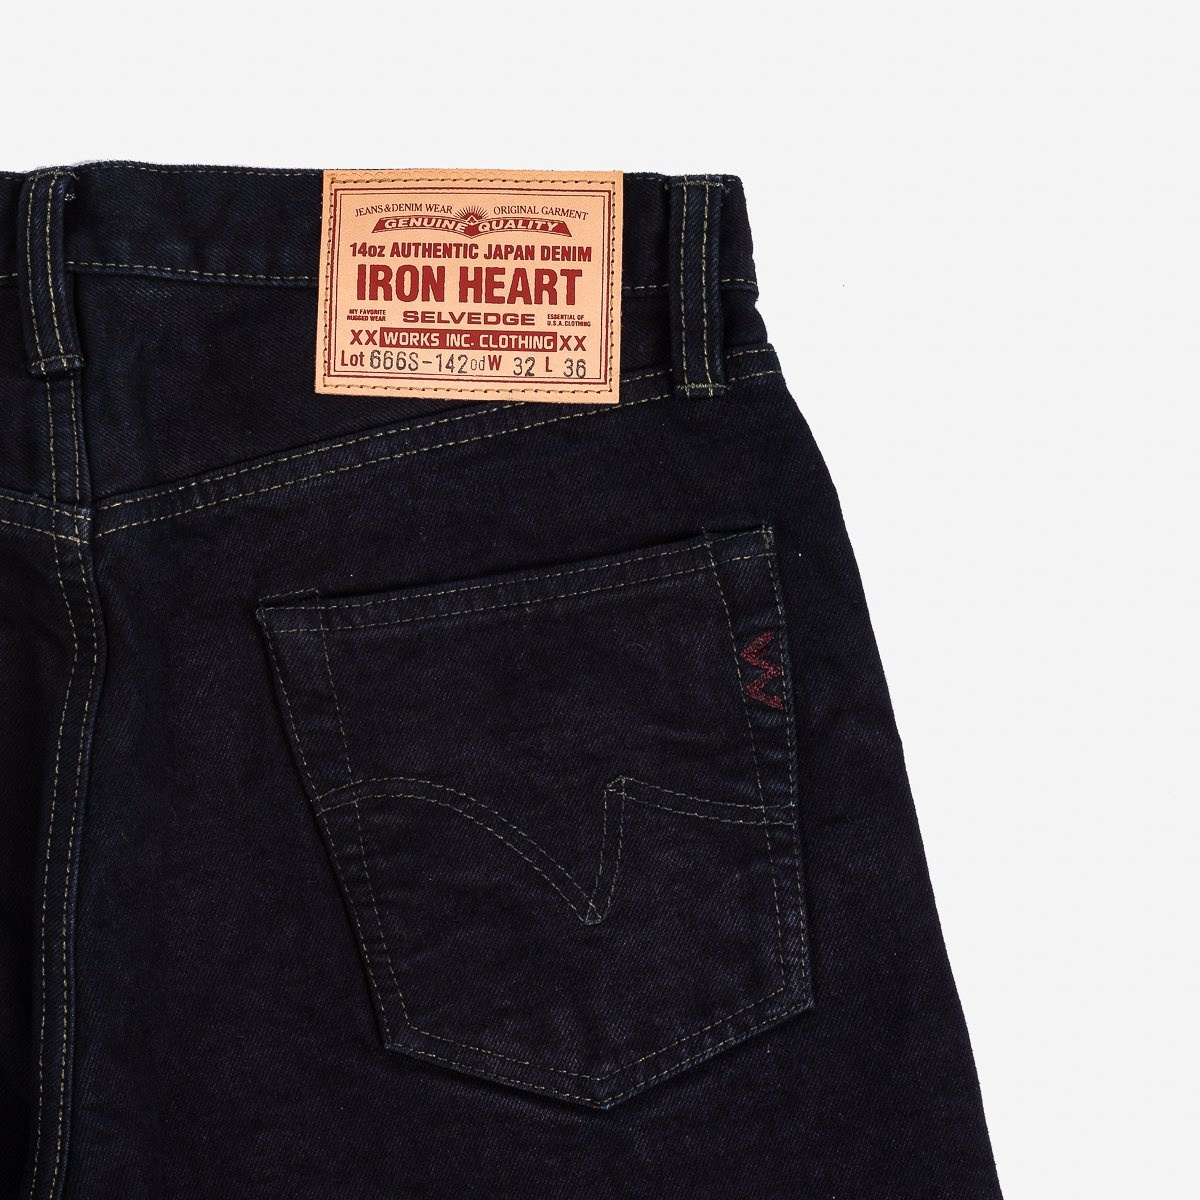 IH-666S-142od 14oz Selvedge Denim Slim Straight Cut Jeans - Indigo Overdyed Black - 7